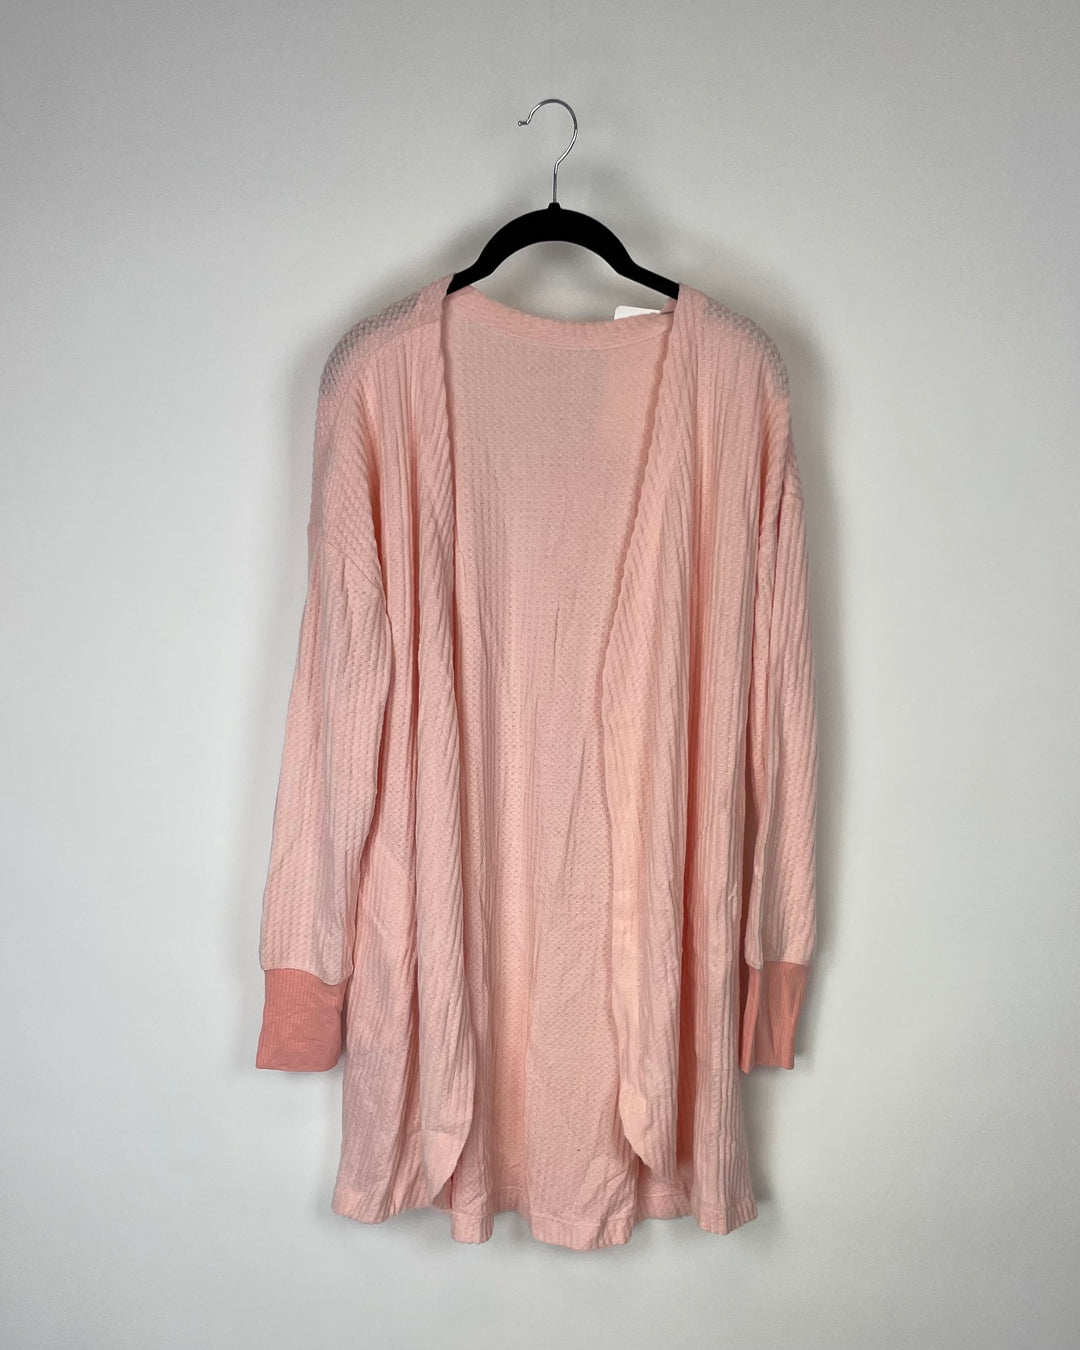 Light Pink Fleece Cardigan - Small and 1X